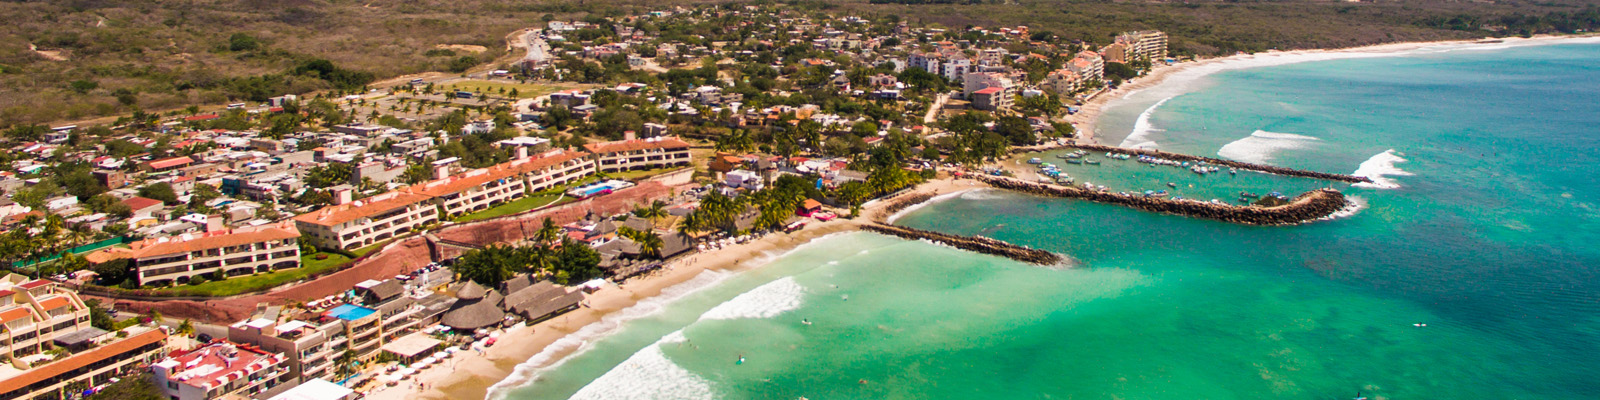 Punta Mita, Mexico – Travel Destinations – Marinalife